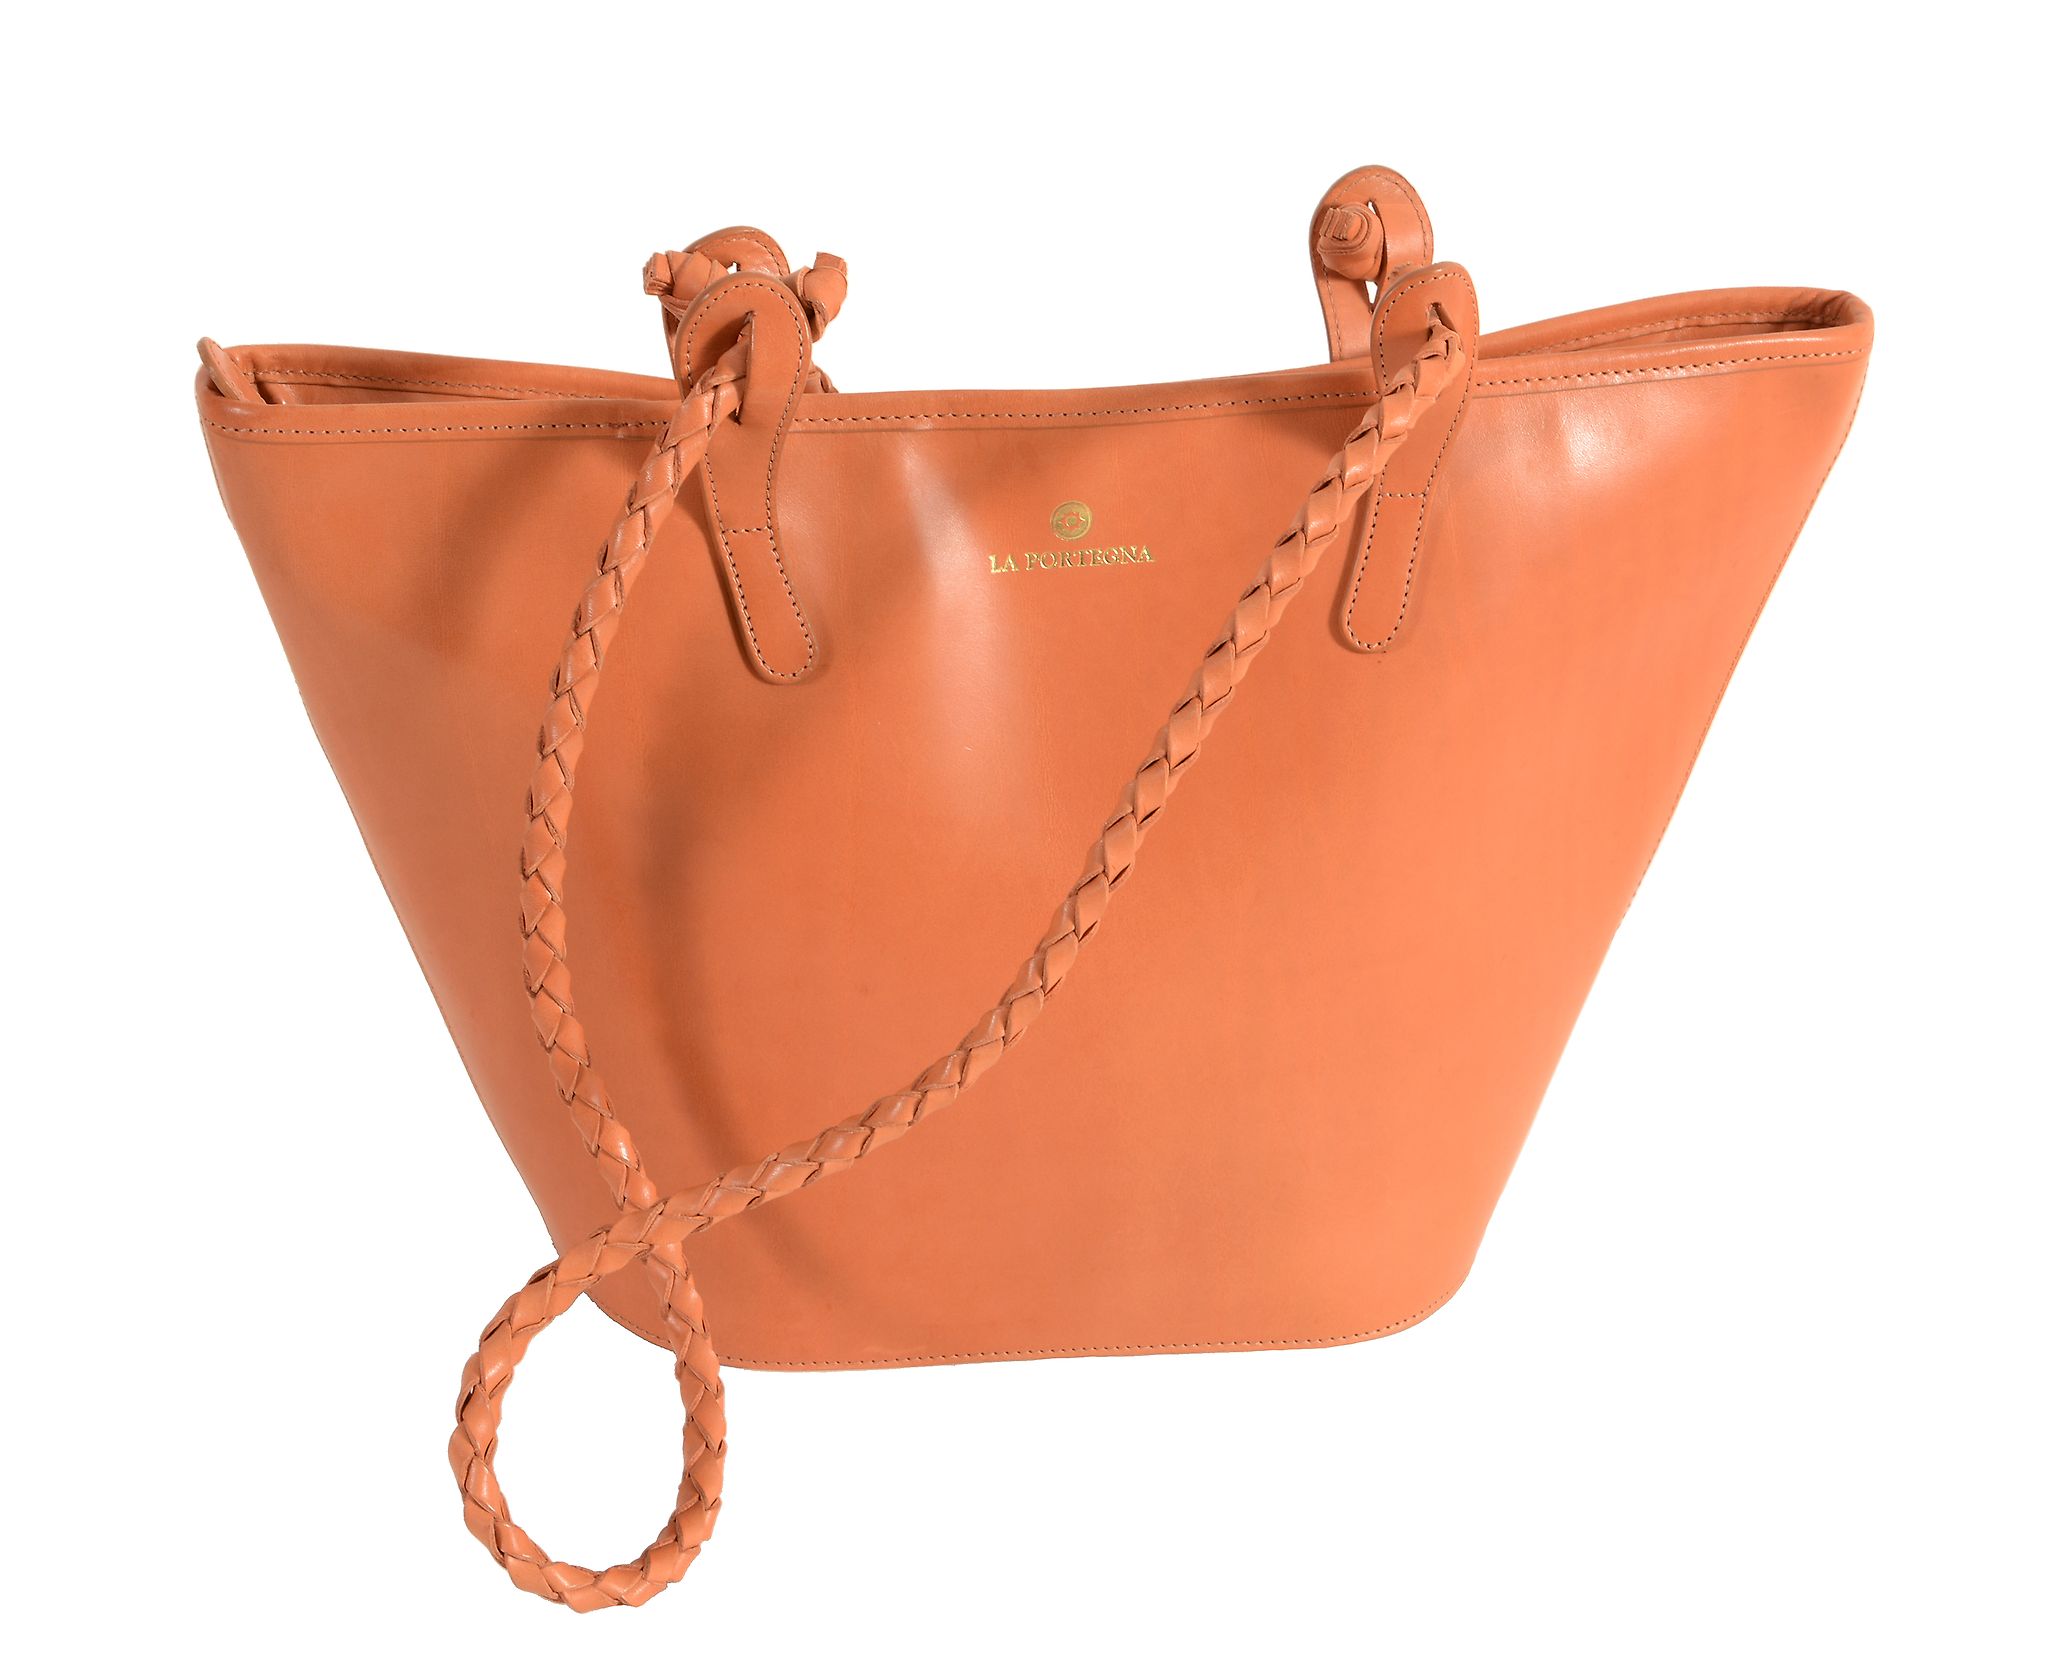 La Portegna, a tan leather handbag, with plaited handles  La Portegna, a tan leather handbag,   with - Image 5 of 6